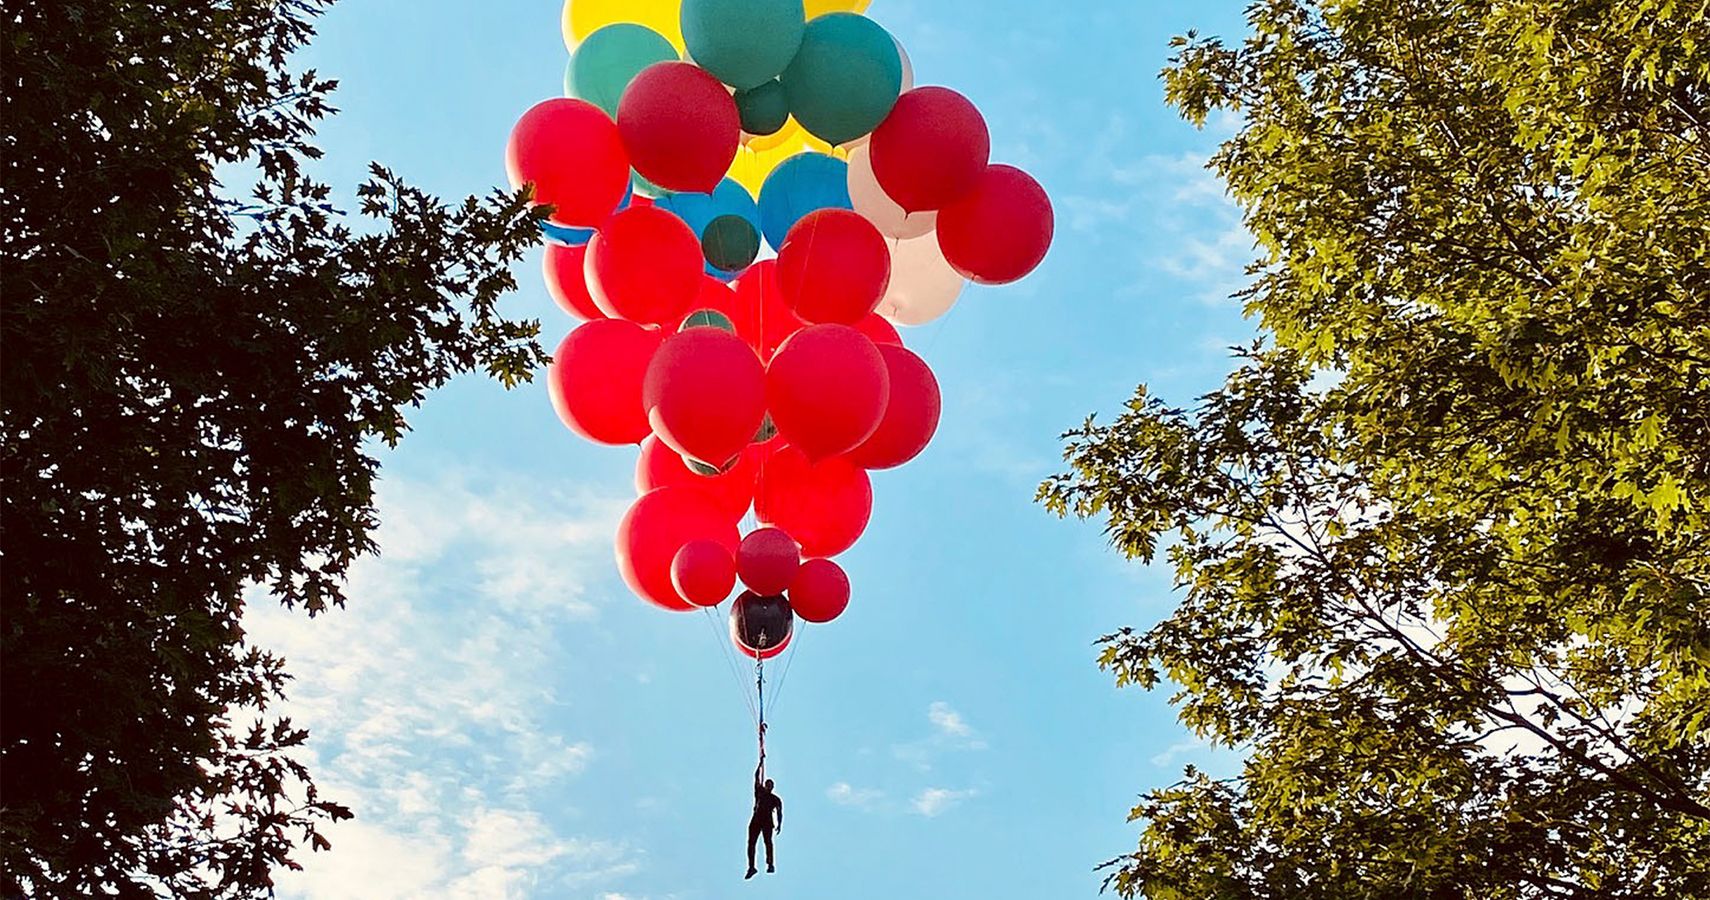 Stunt artist David Blaine hanging from helium balloons